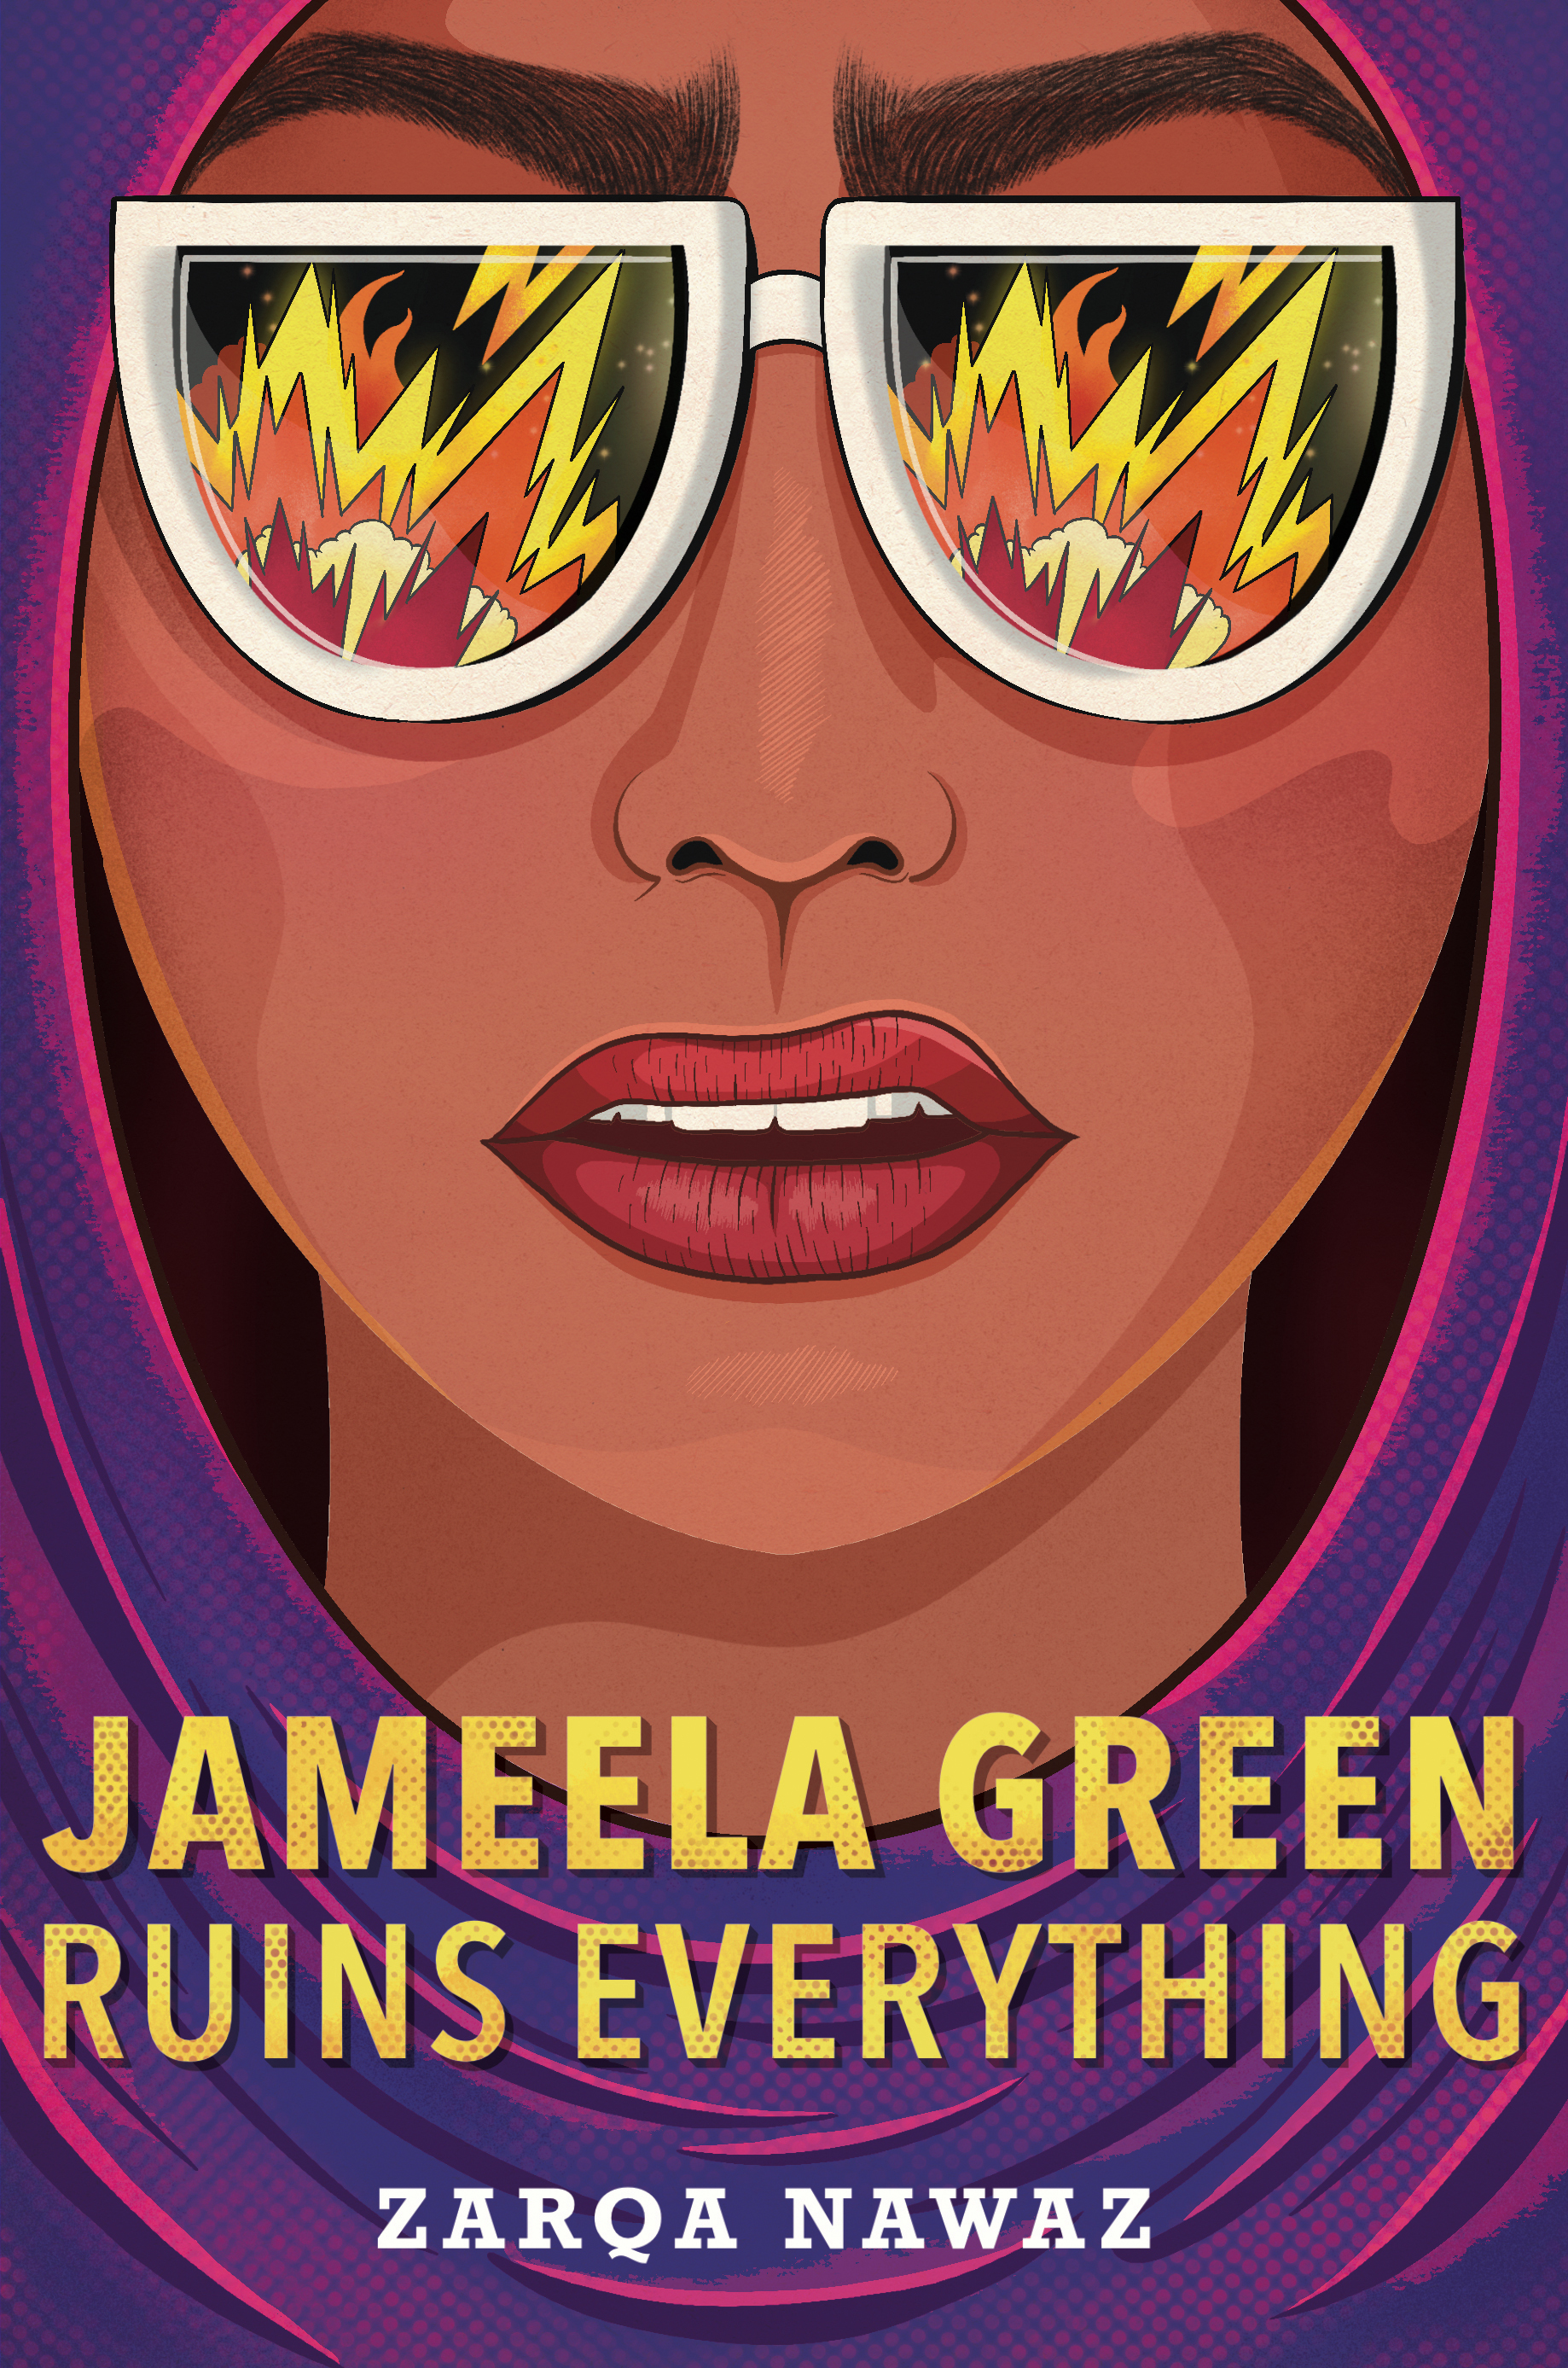 Jameela Green Ruins Everything Free Download